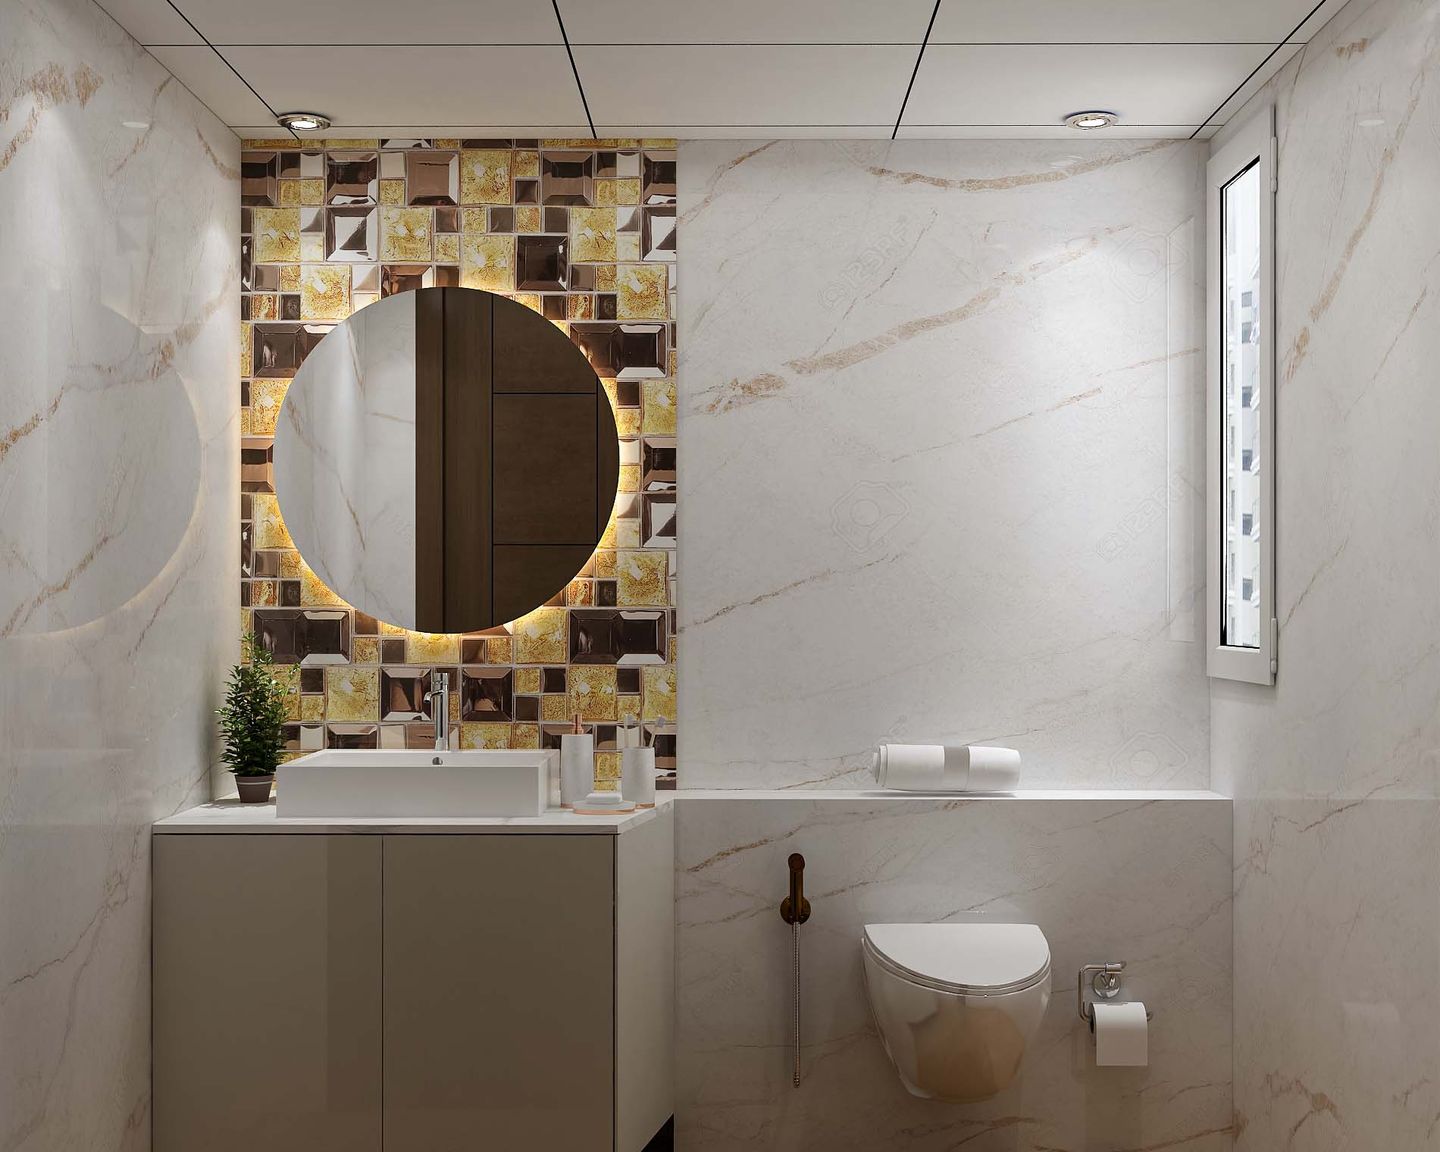 Marble Washroom Design With A Round Mirror - Livspace